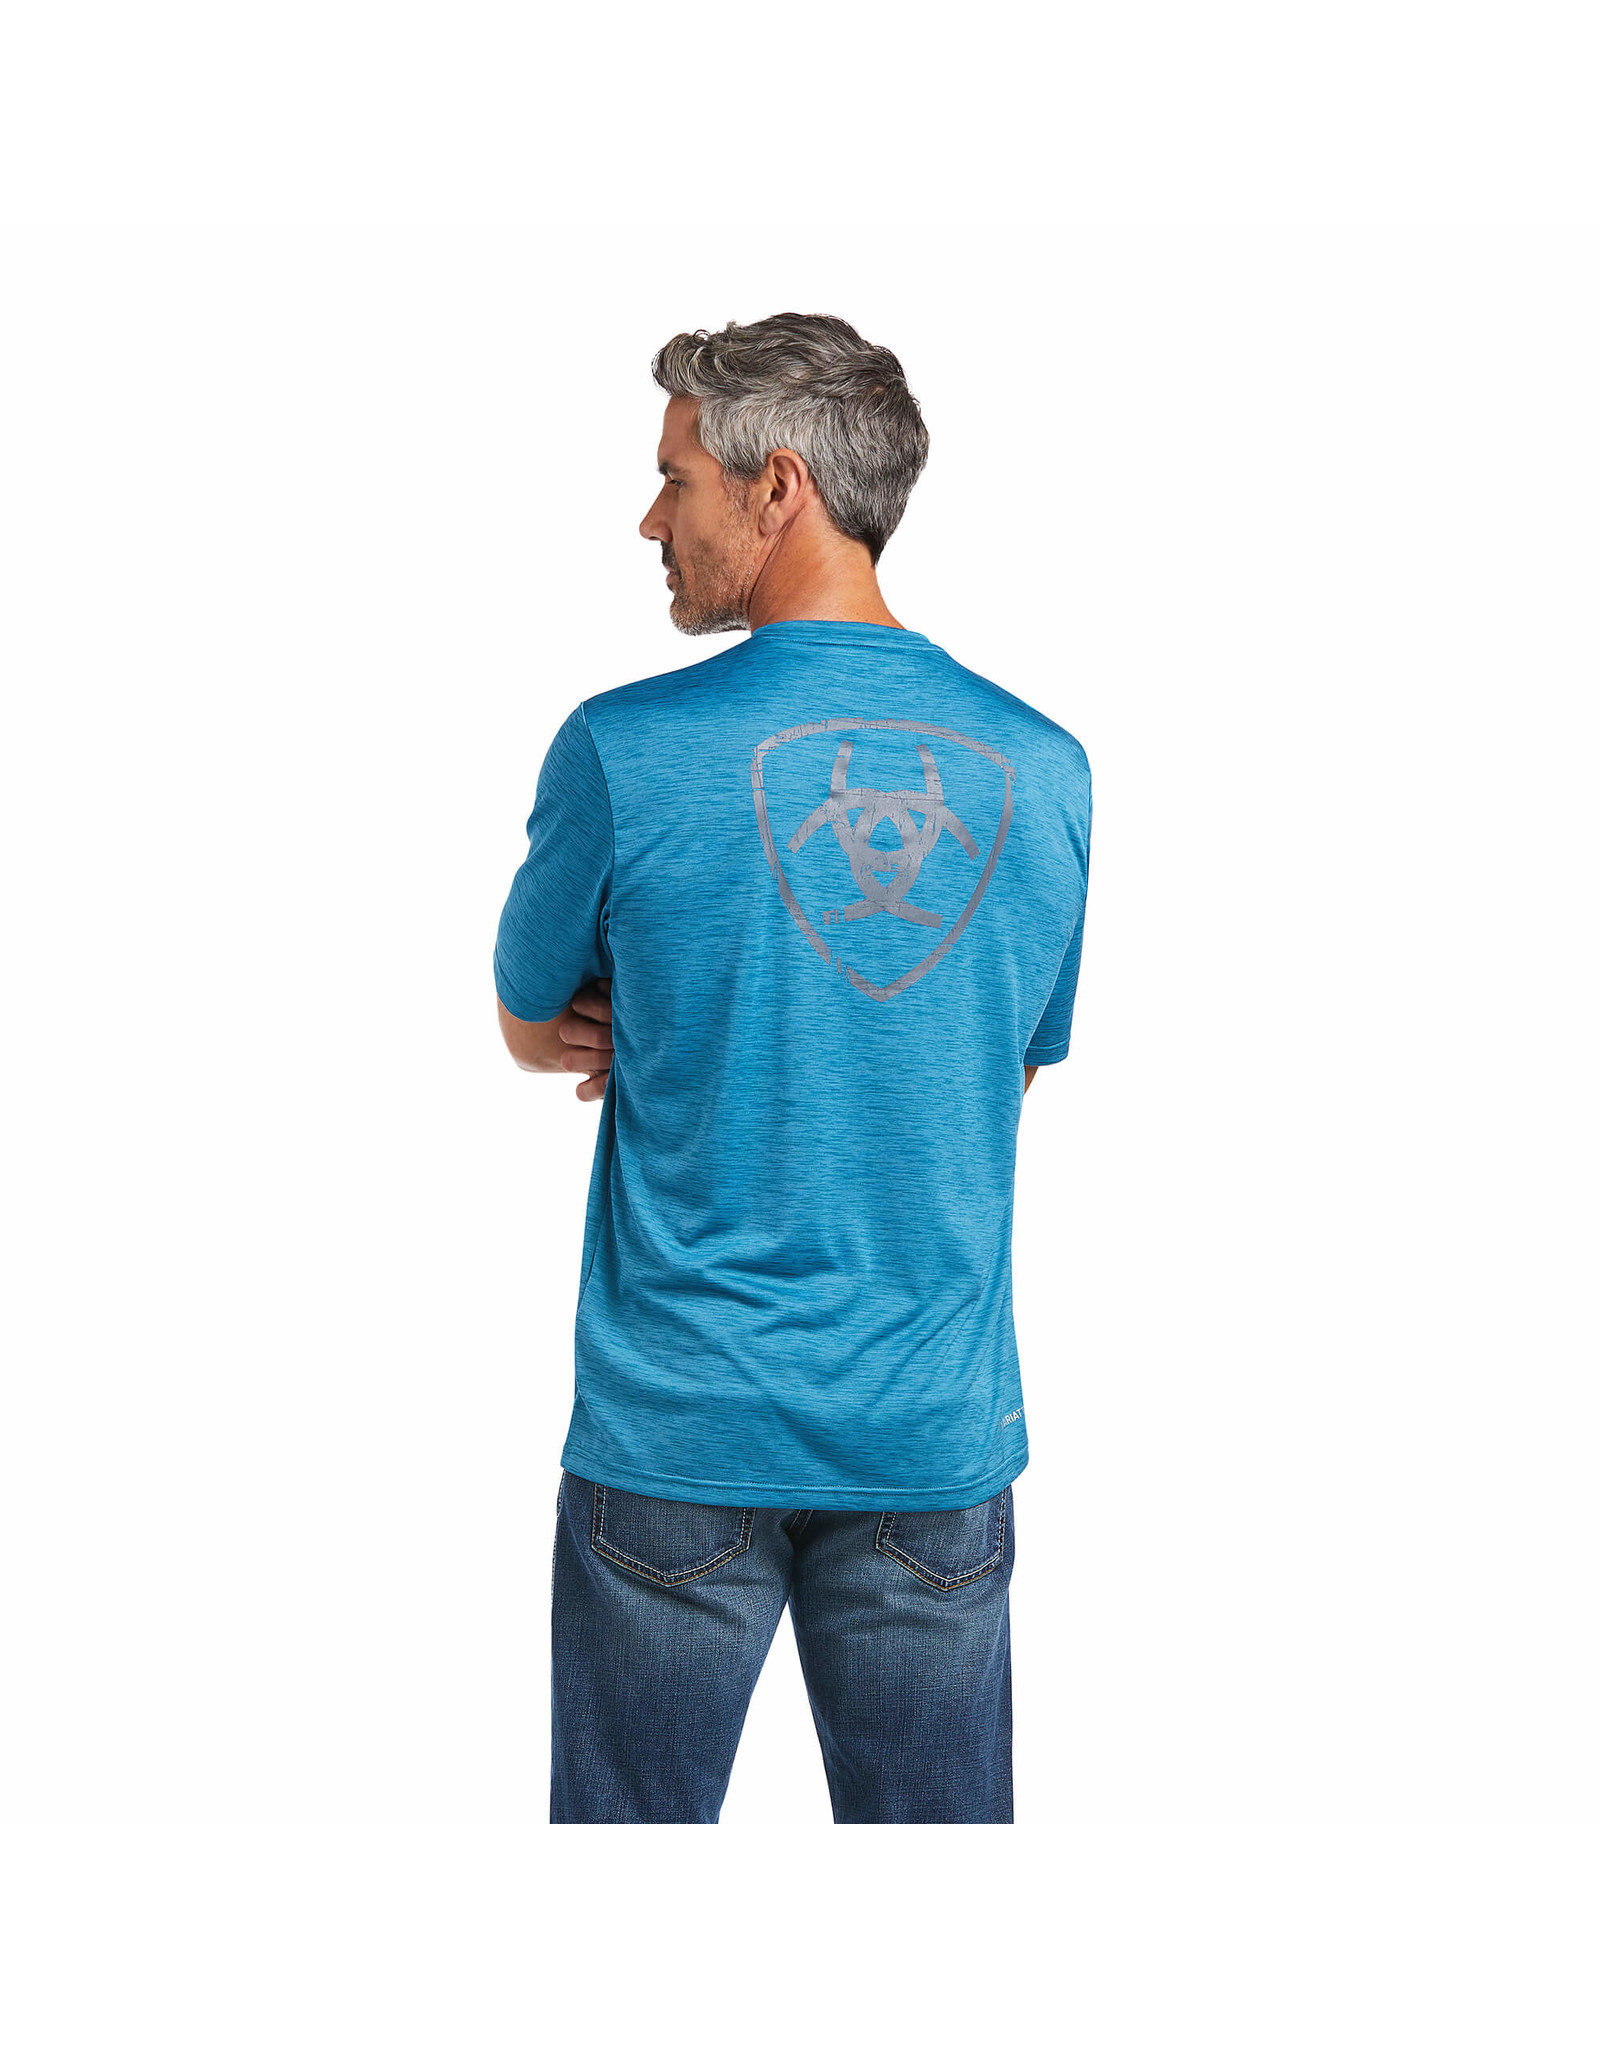 Ariat Men's Charger Shield Fluid Teal 10039555 T-Shirt